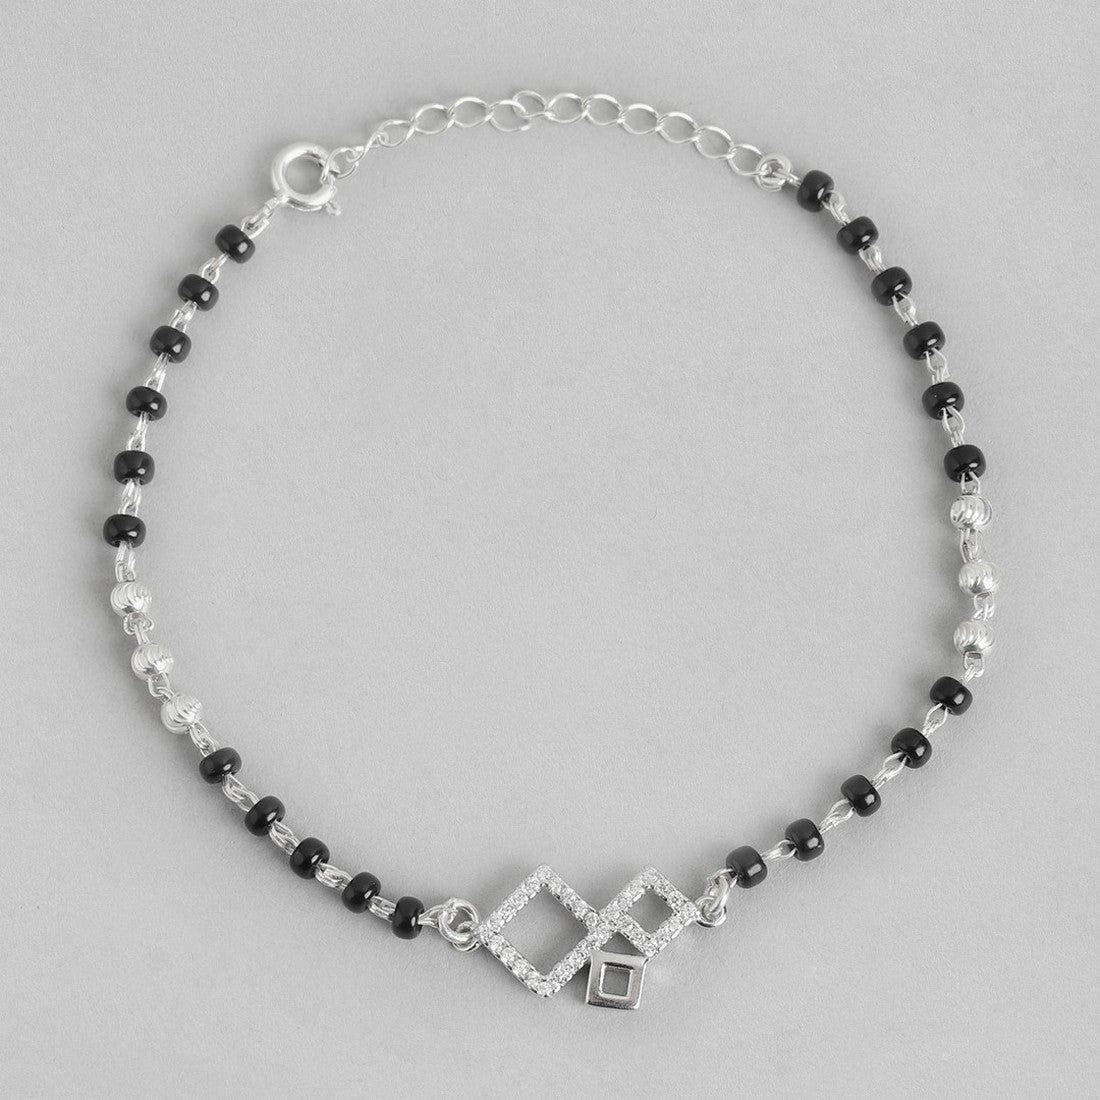 Geometric 925 Silver Mangalsutra Bracelet